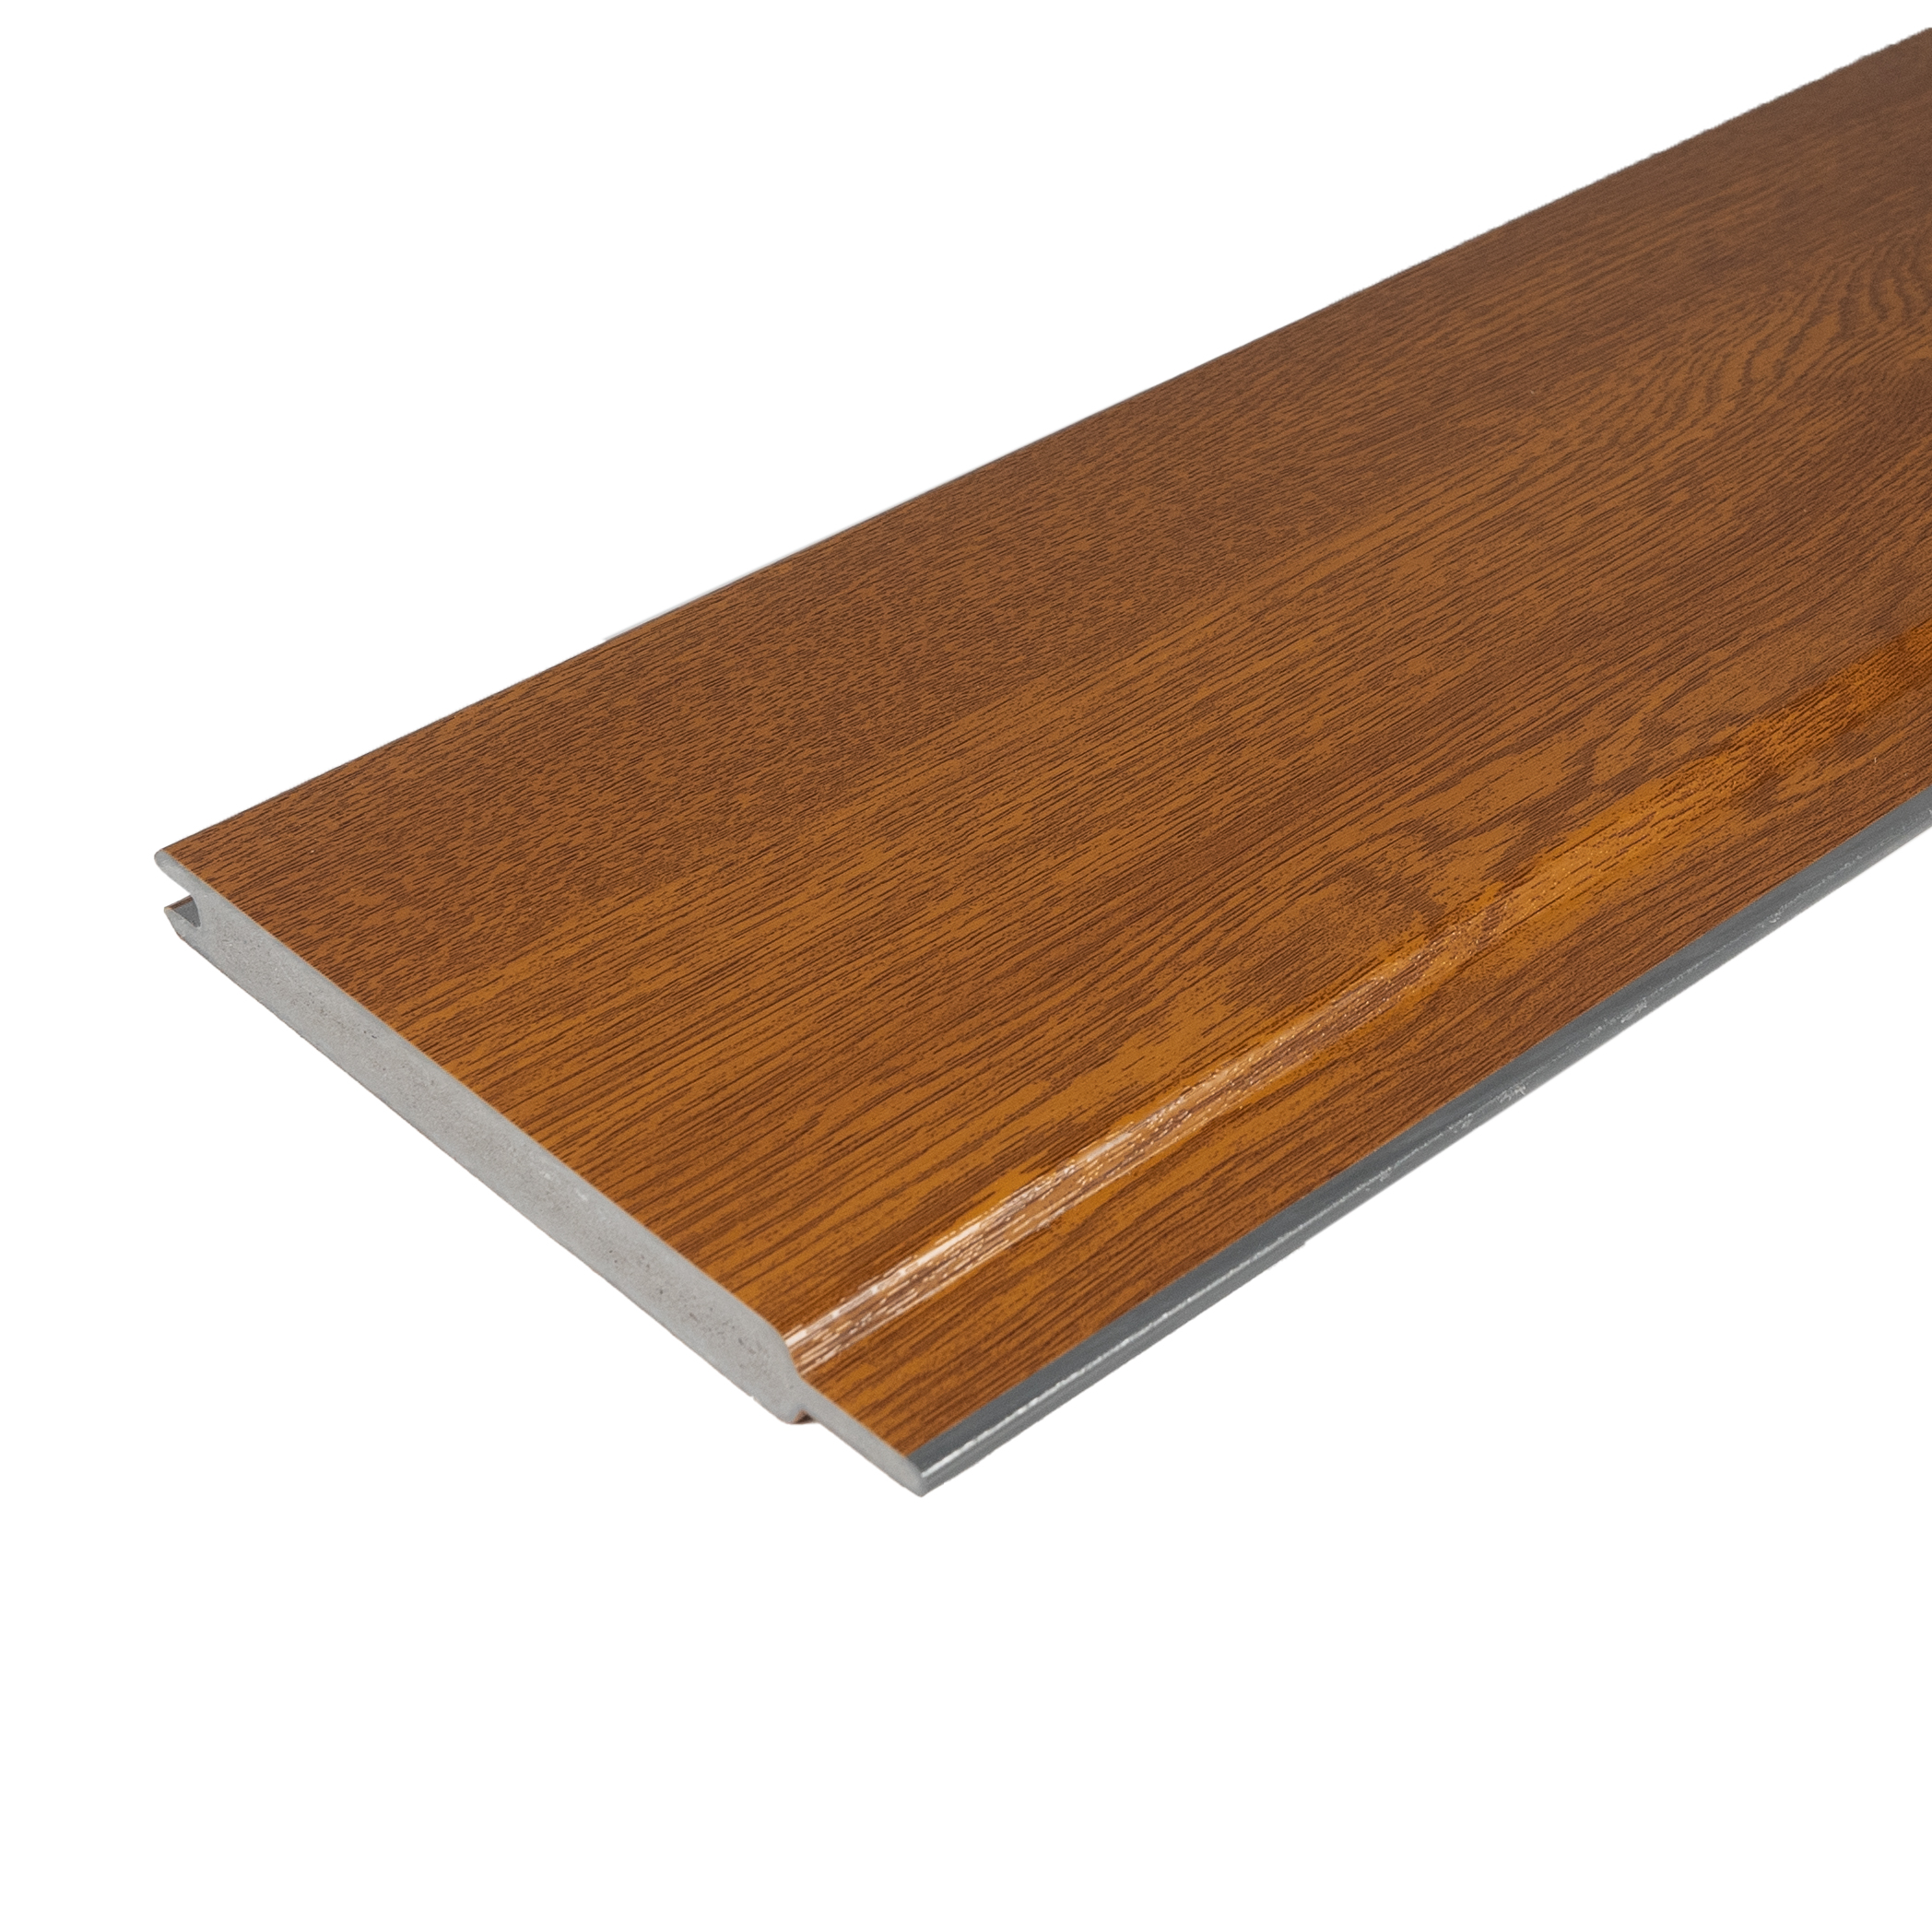 Torfüllung Kunststoff Golden Oak - Massiv Kunststoffbretter für Tore, Türen & Zäune 143 x 15 mm 